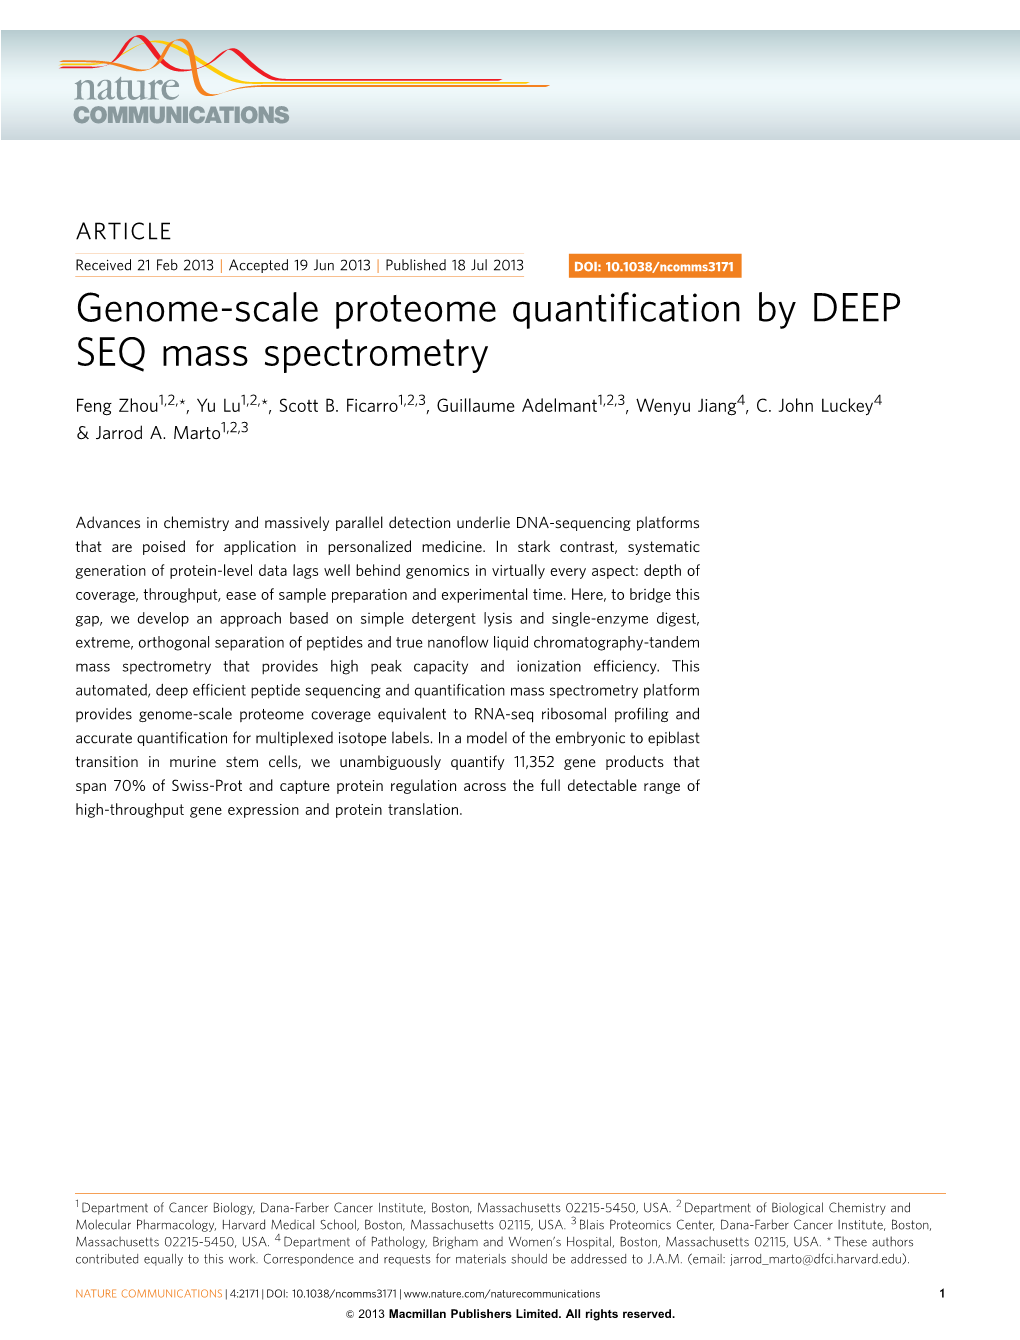 Genome-Scale Proteome Quantification by DEEP SEQ Mass